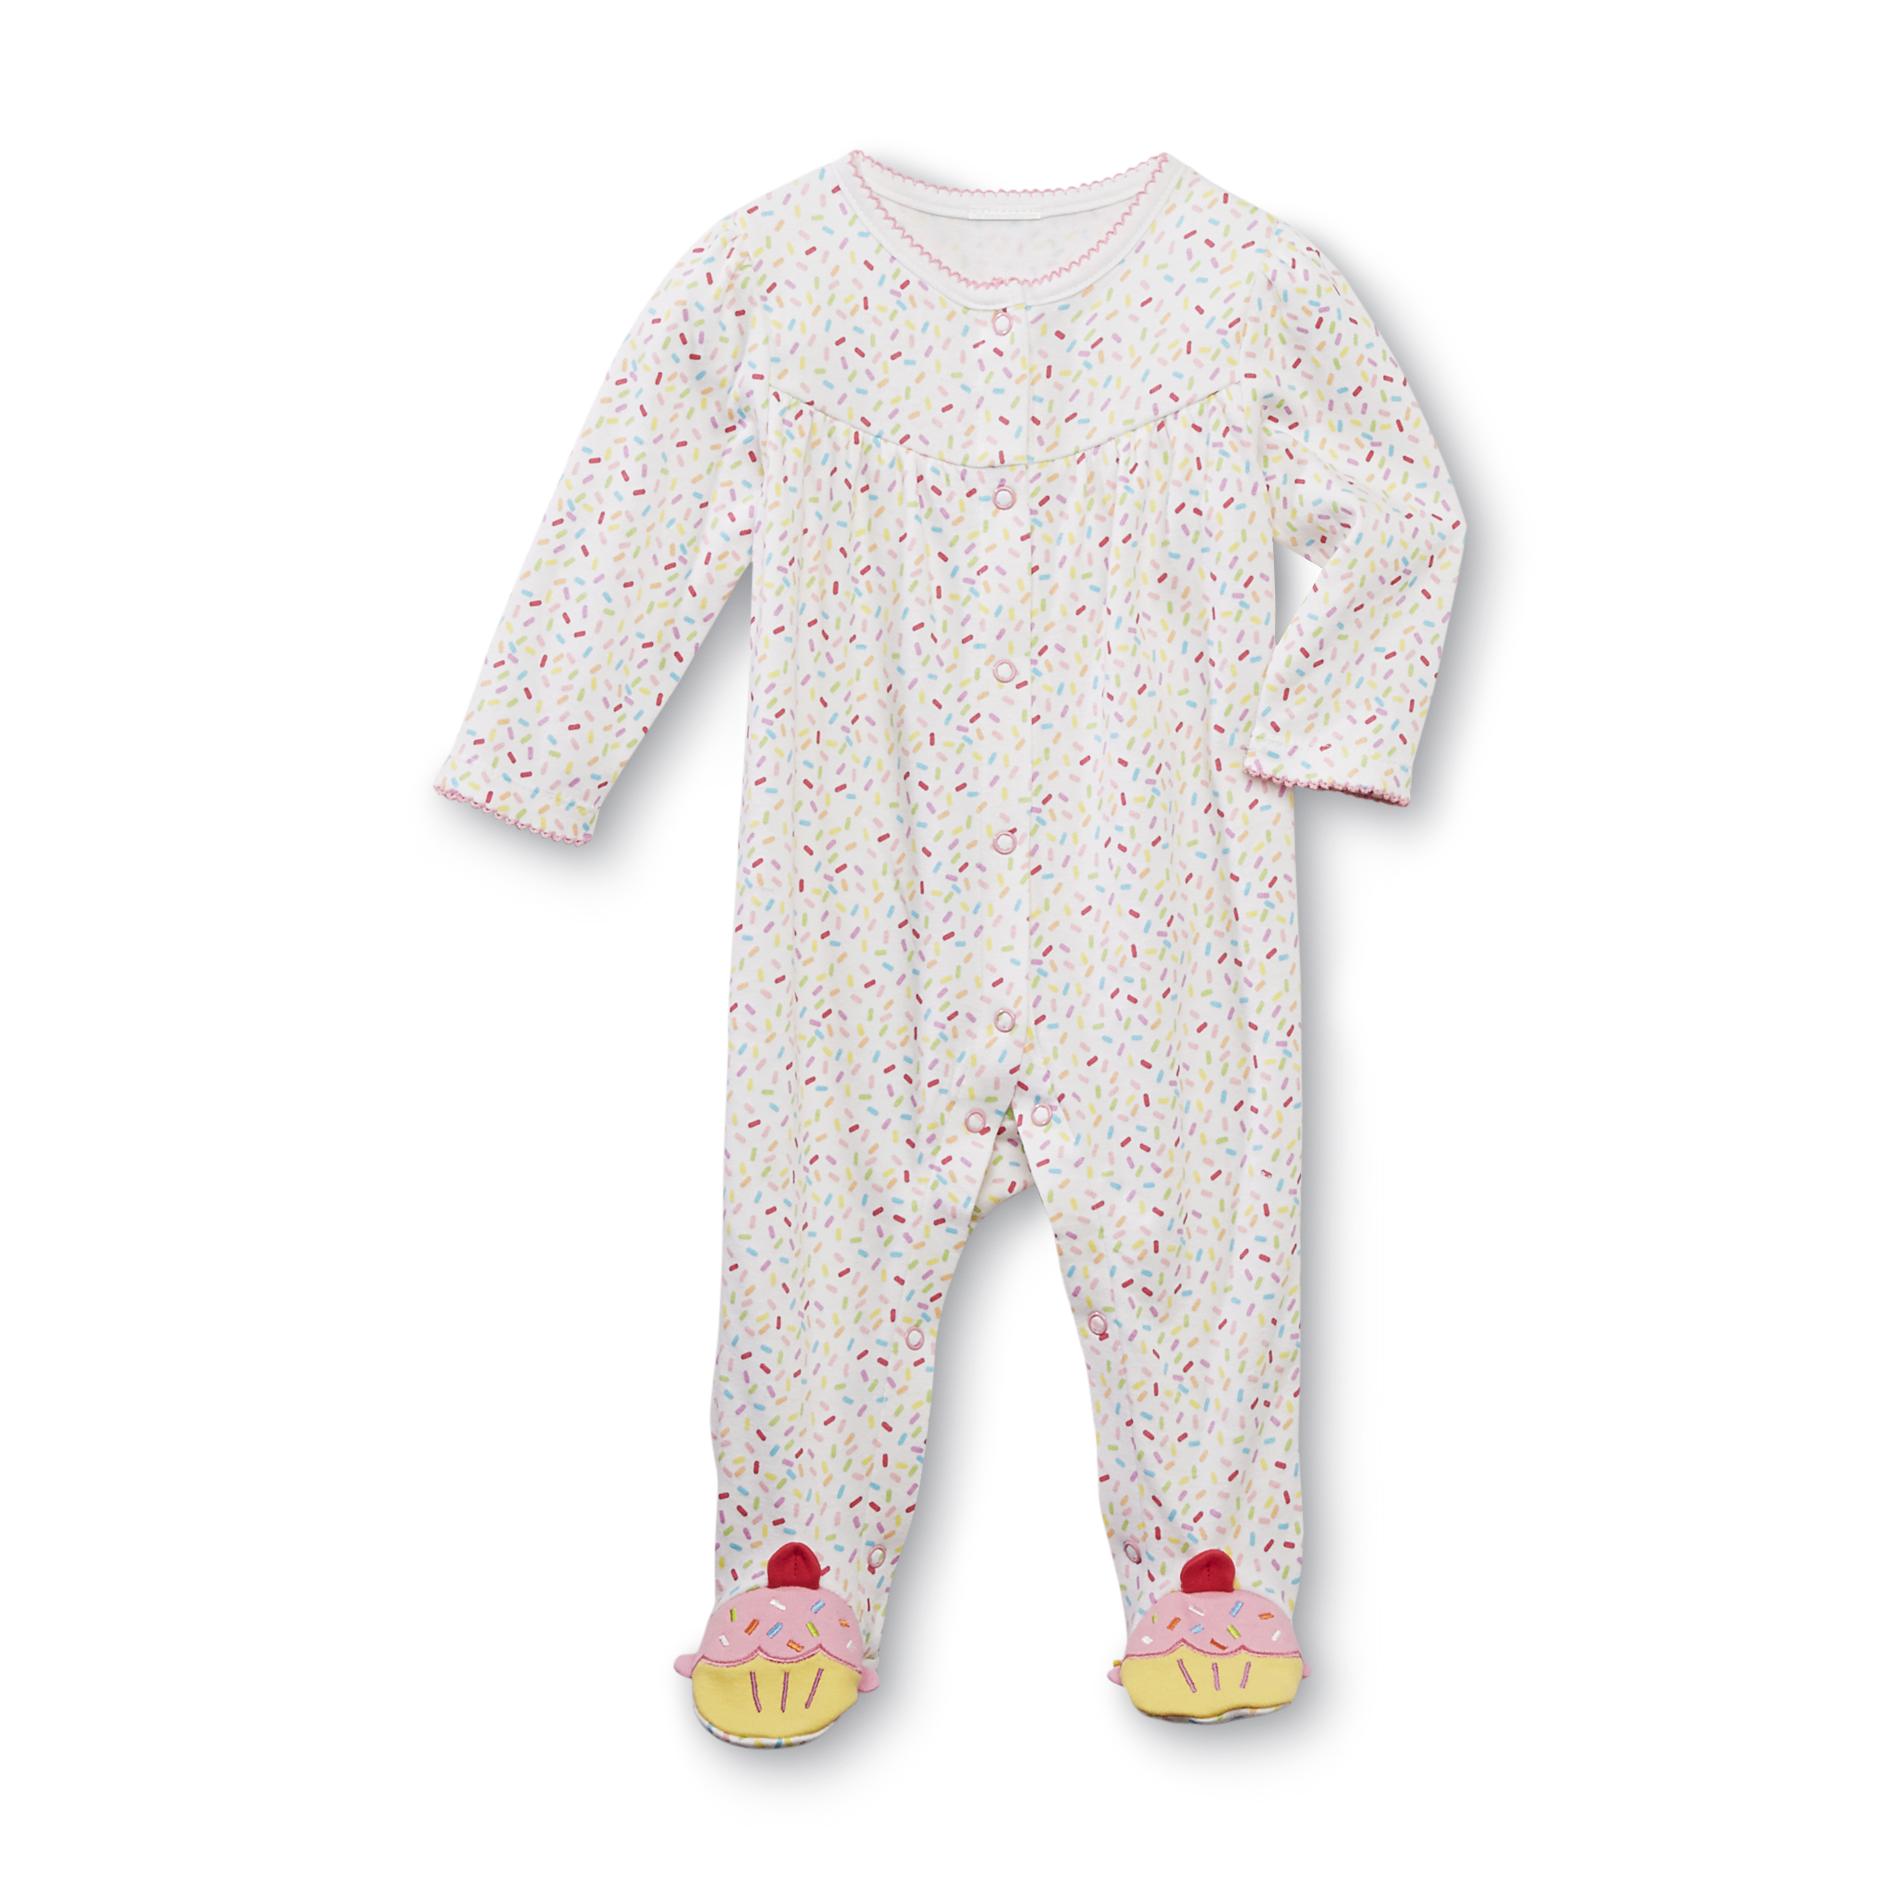 Small Wonders Newborn Girl's Footed Sleeper Pajamas - Sprinkles